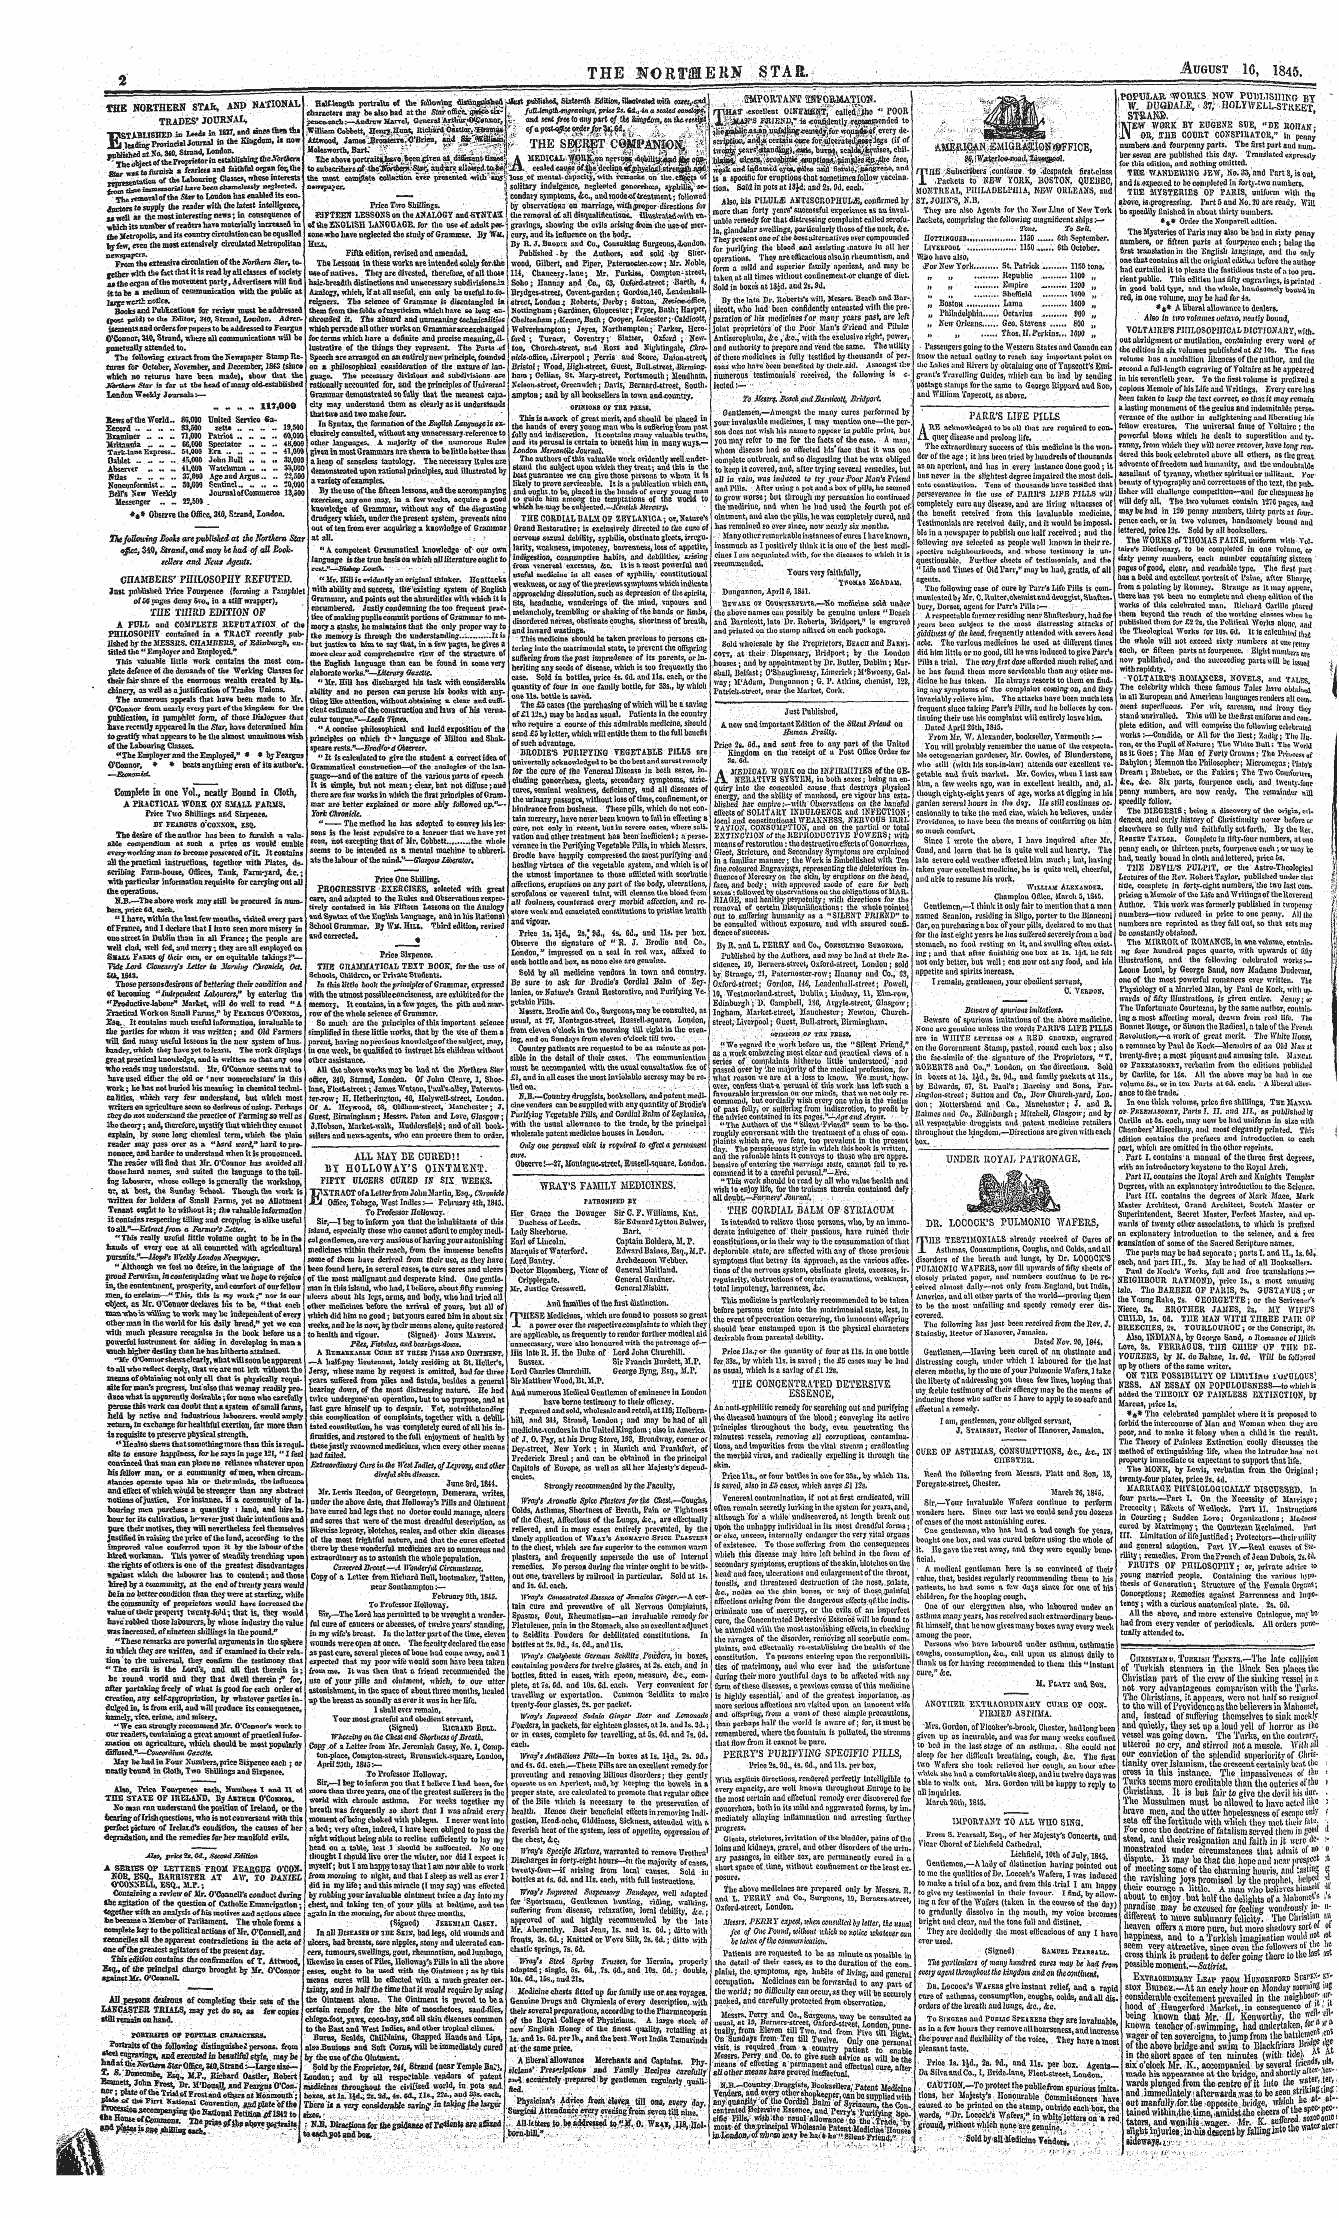 Northern Star (1837-1852): jS F Y, 3rd edition - Ot Lurkisli Steamers In The Black Sea Pl...